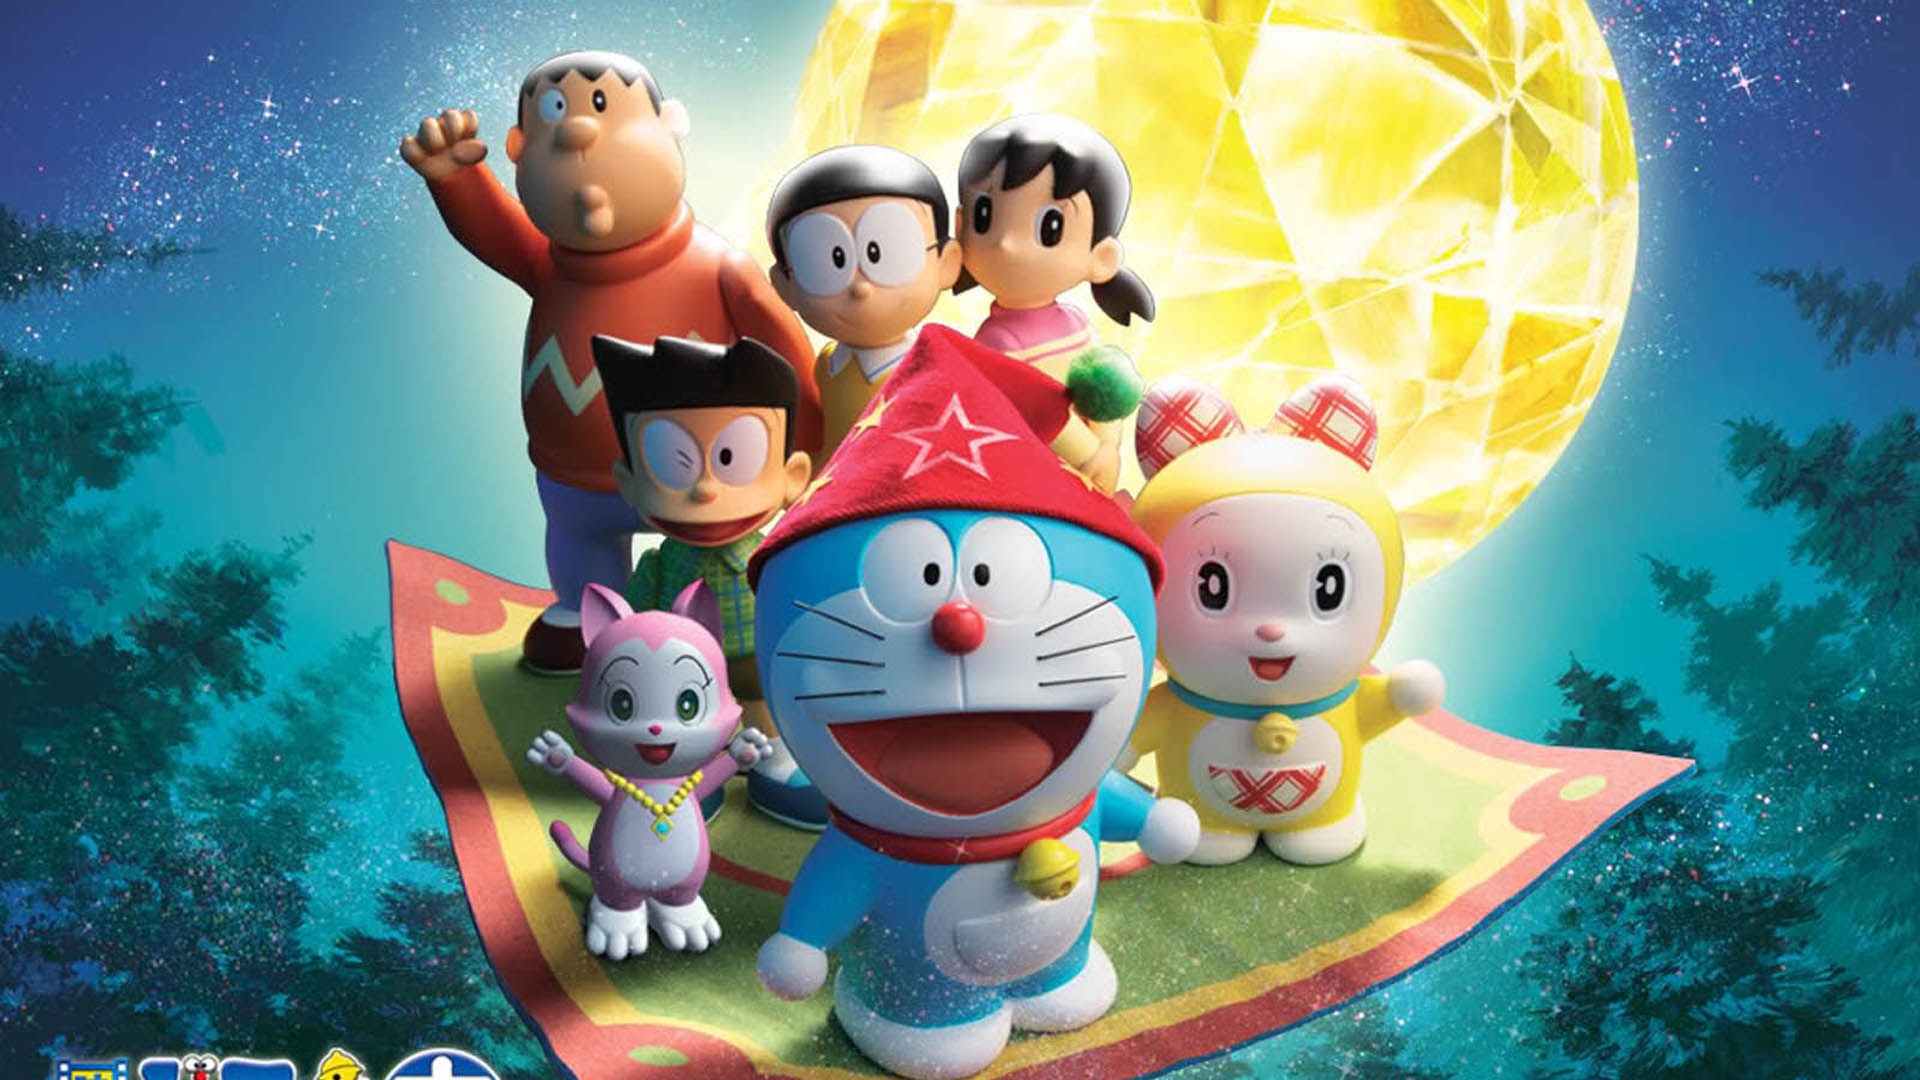 Doraemon Photos Download The BEST Free Doraemon Stock Photos  HD Images